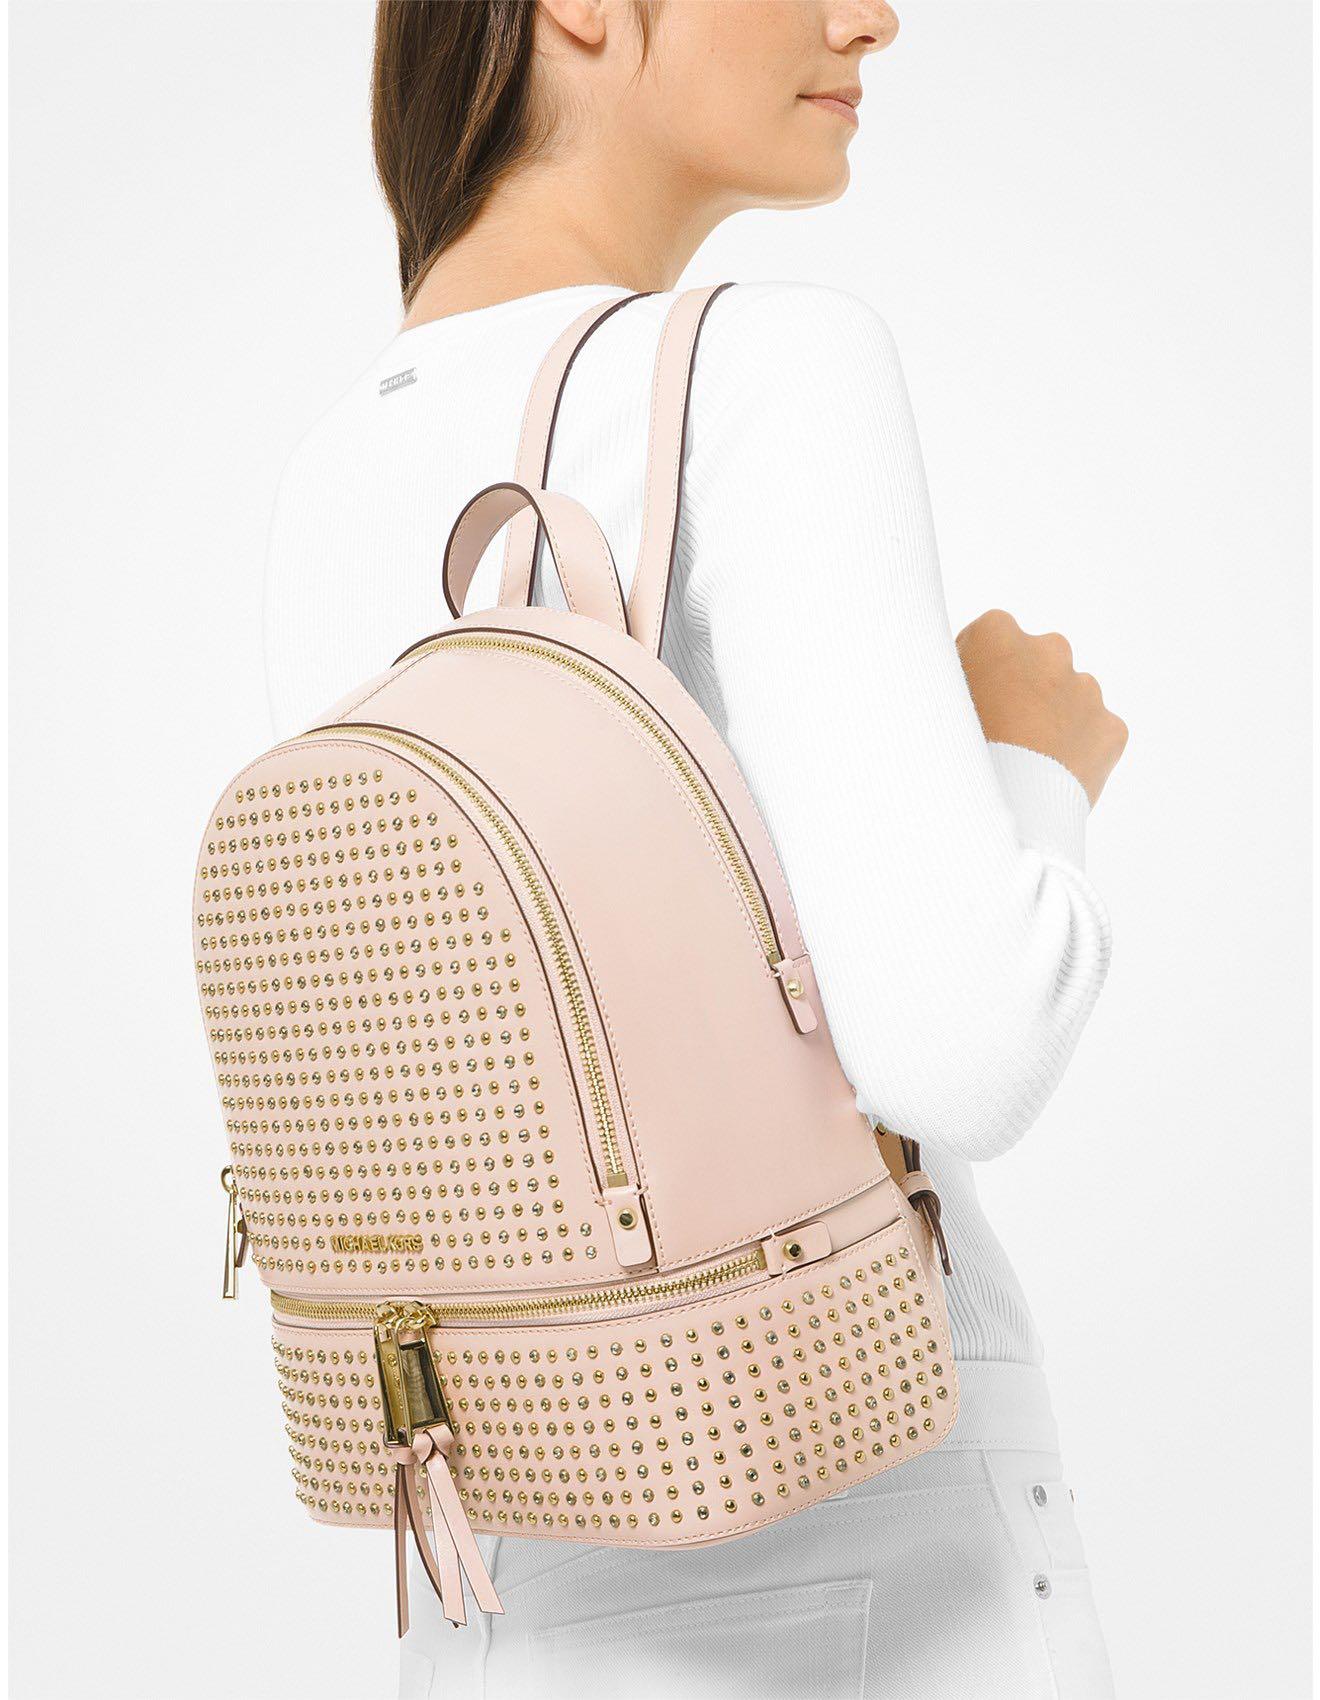 Michael Michael Kors  Blush Pink Leather Mini Backpack Purse  wwwproesteprcombr